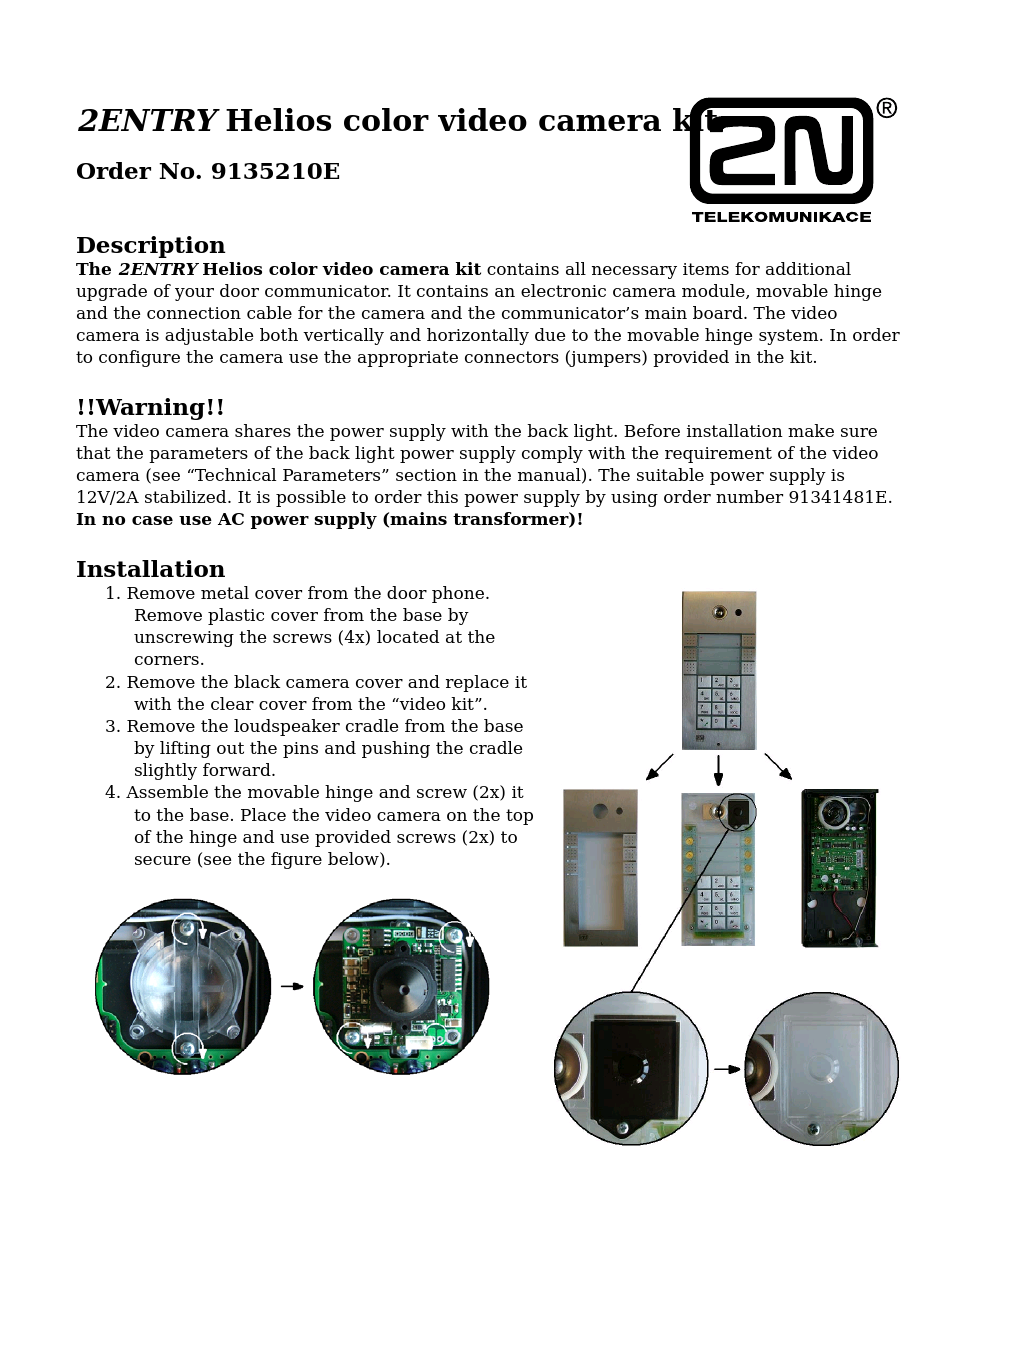 Door camera for 2N Helios - Installation manual - camera 9135210E